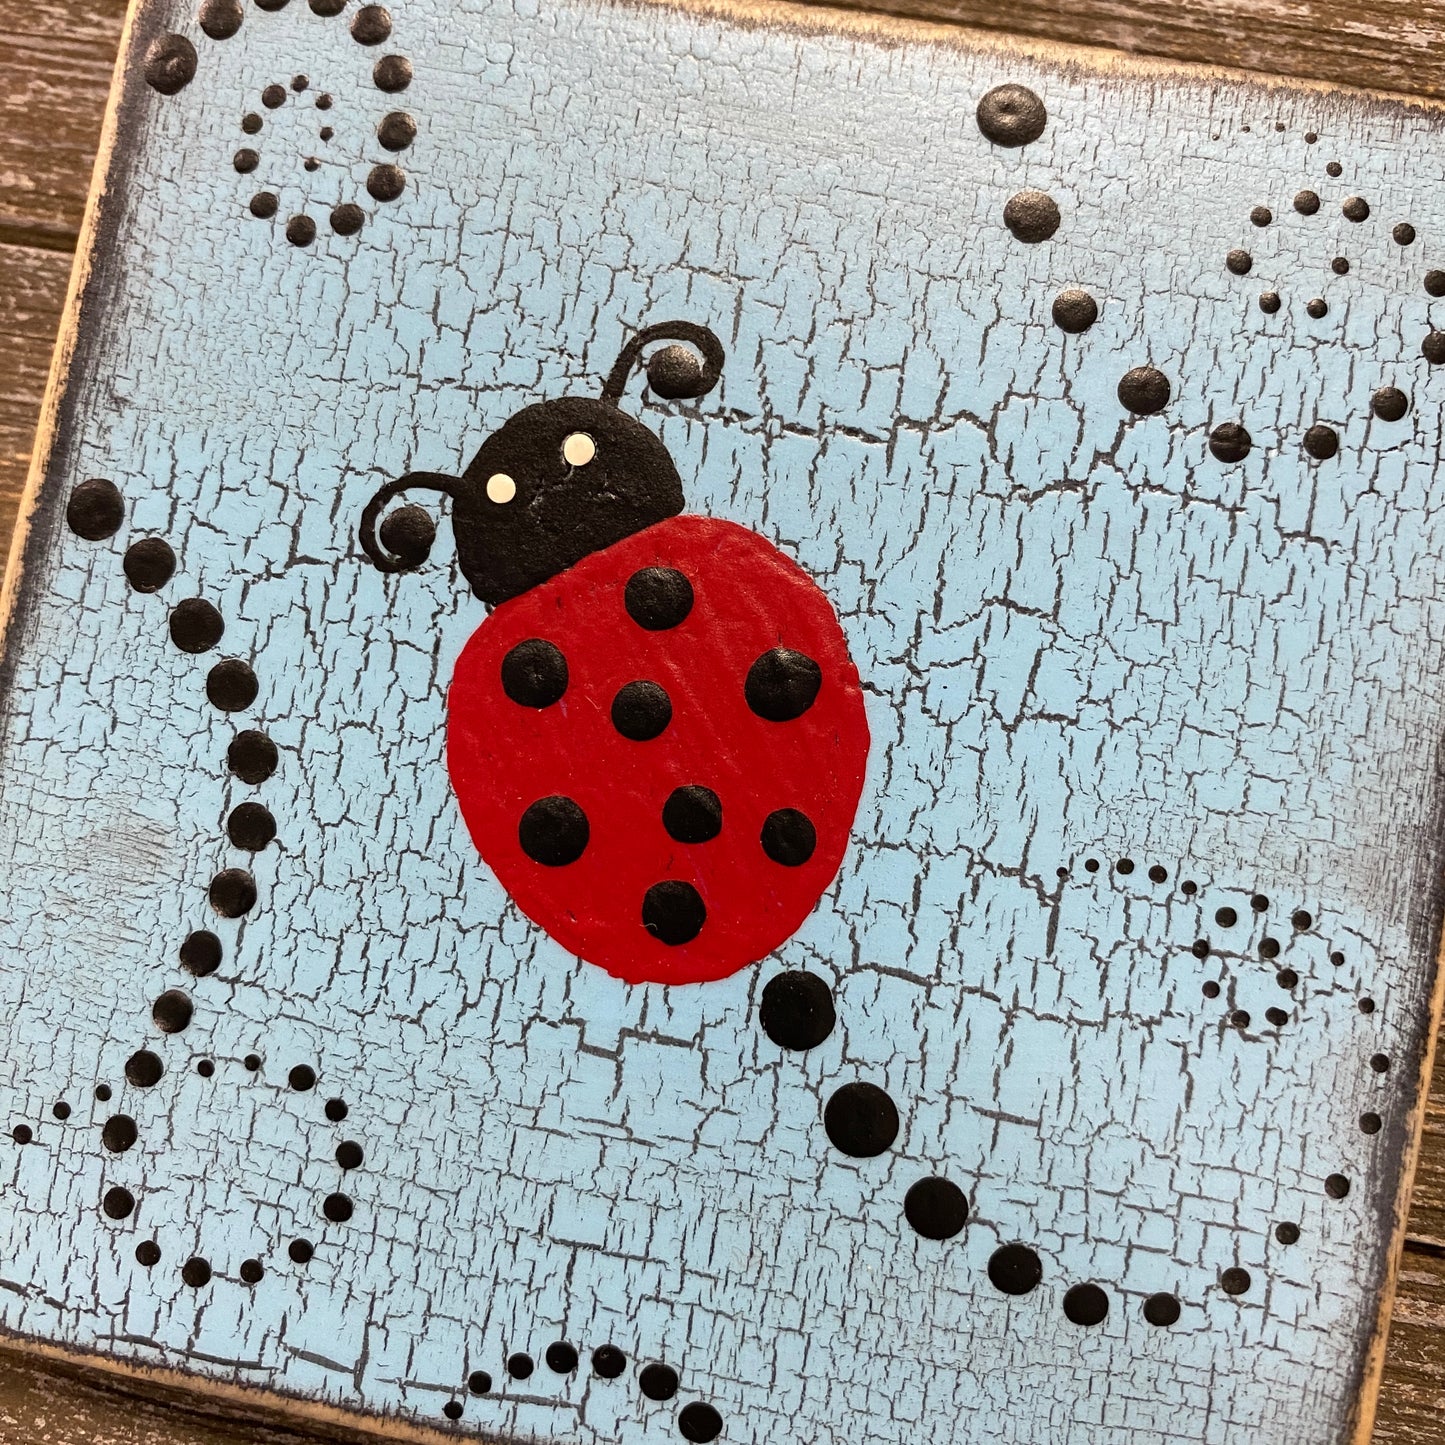 Painted Ladybug Tile on Easel - Blue and Black Dot